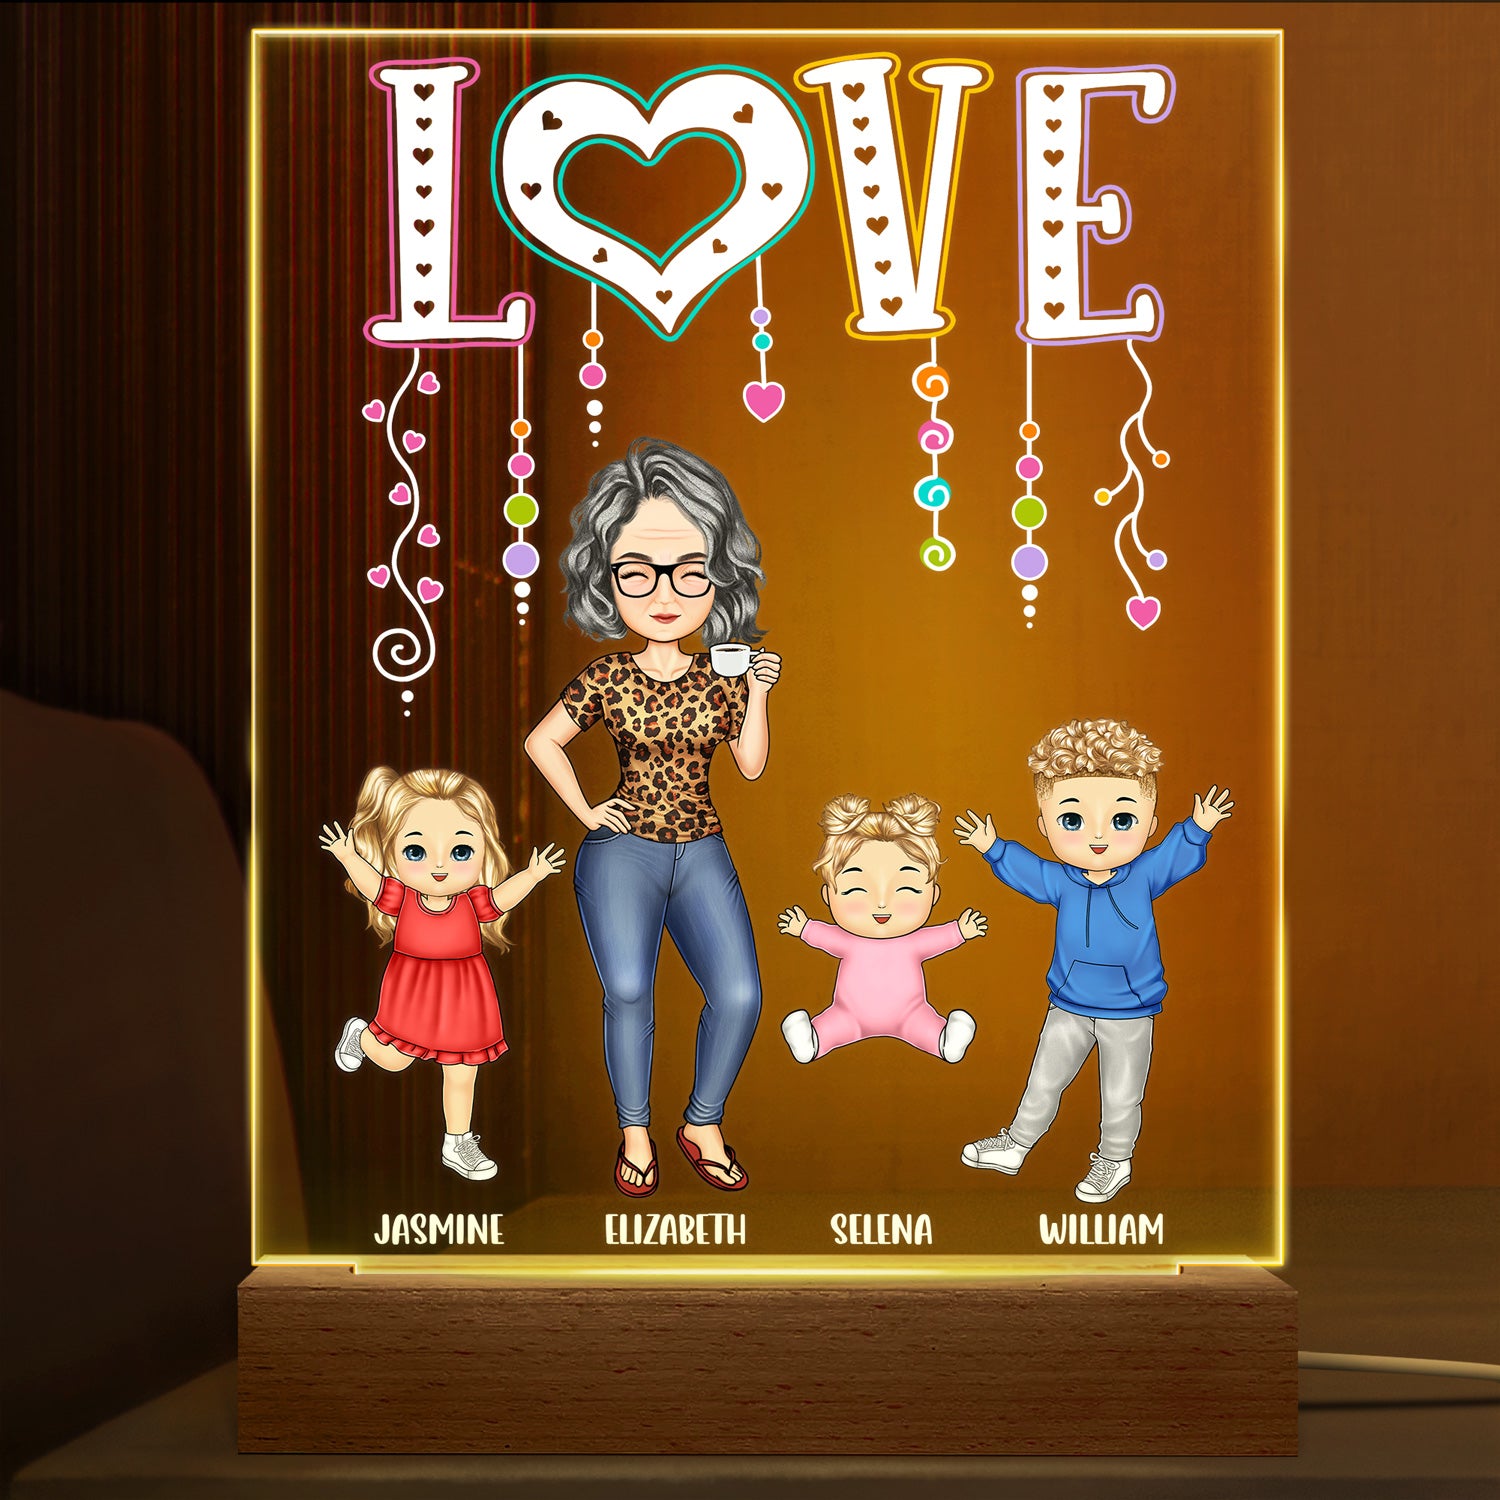 Love Grandma Mom - Gift For Mother, Grandma - Personalized 3D Led Light Wooden Base